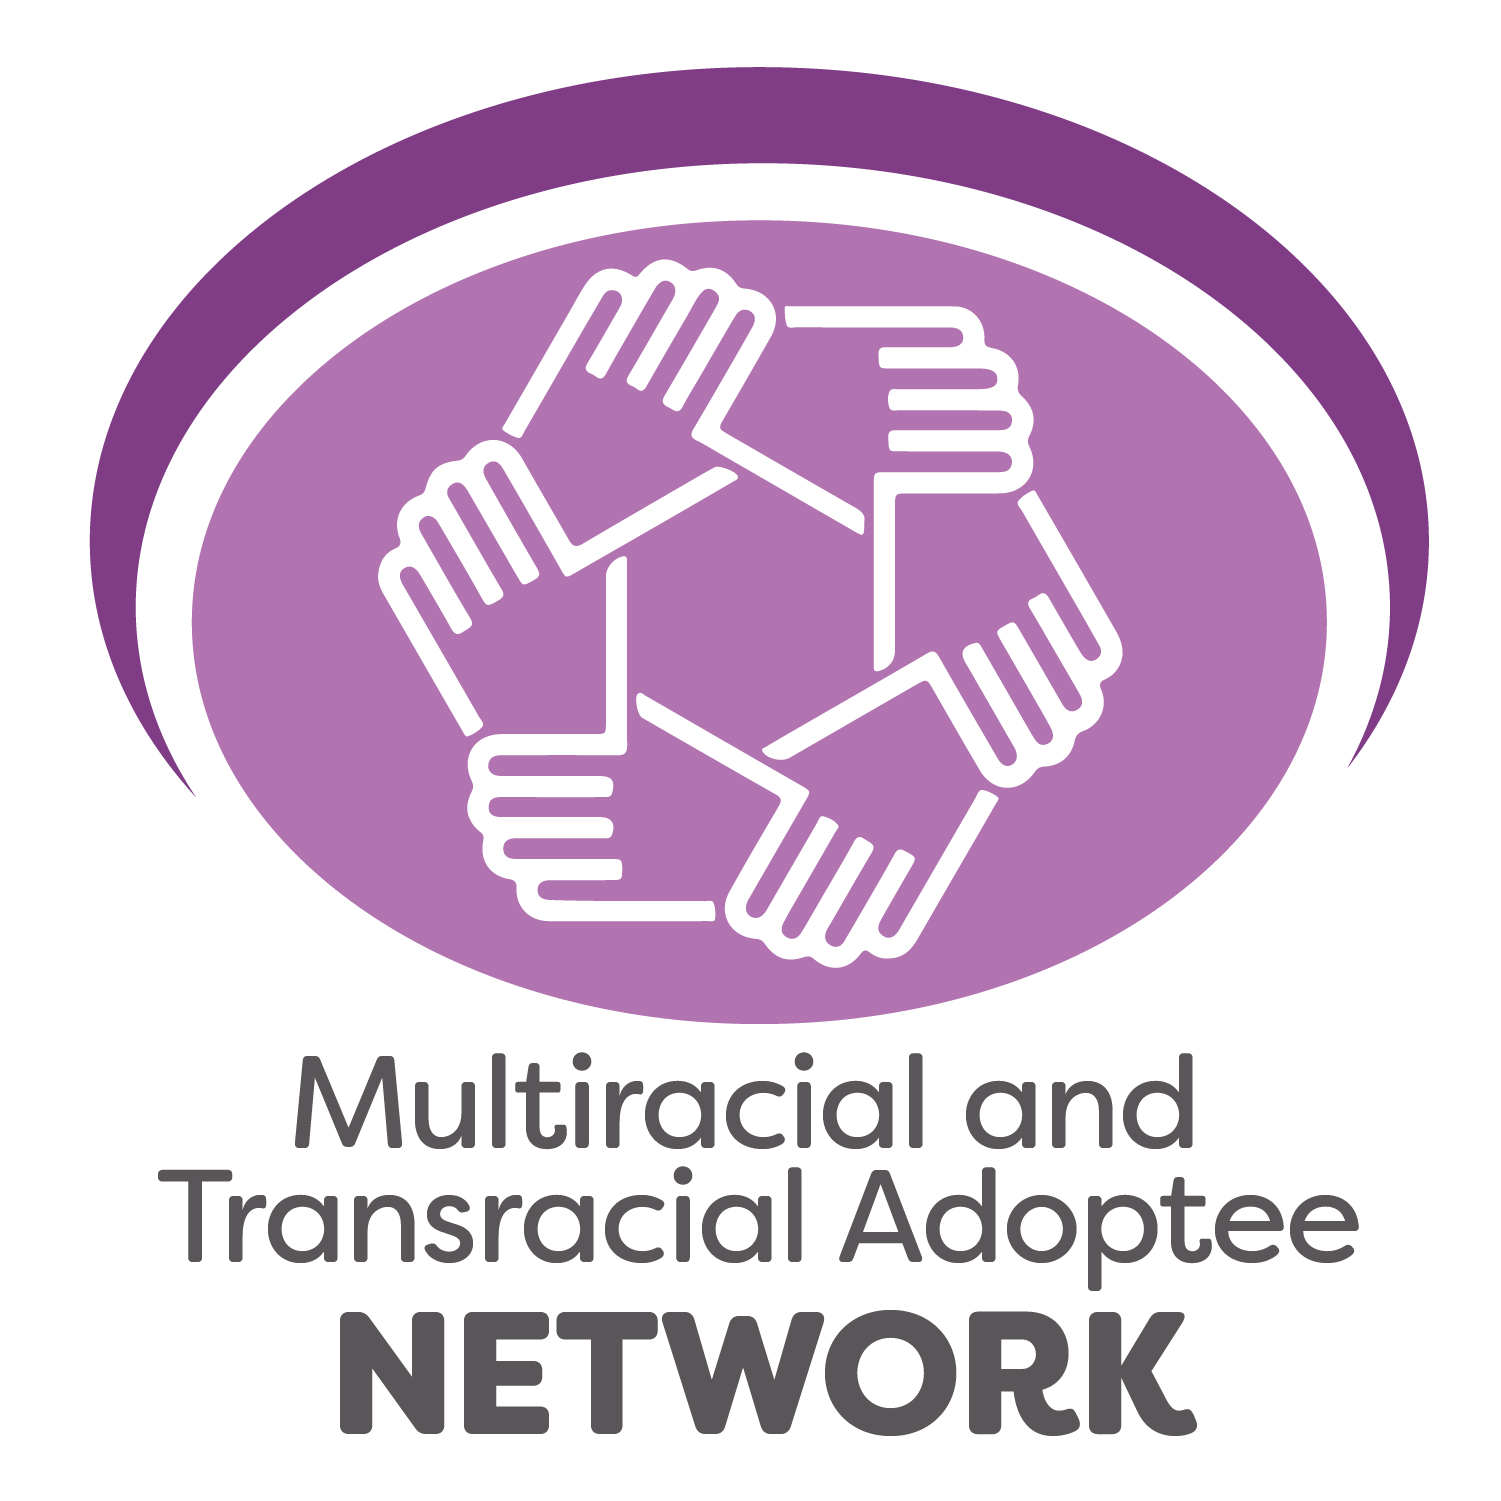 Multiracial Network logo